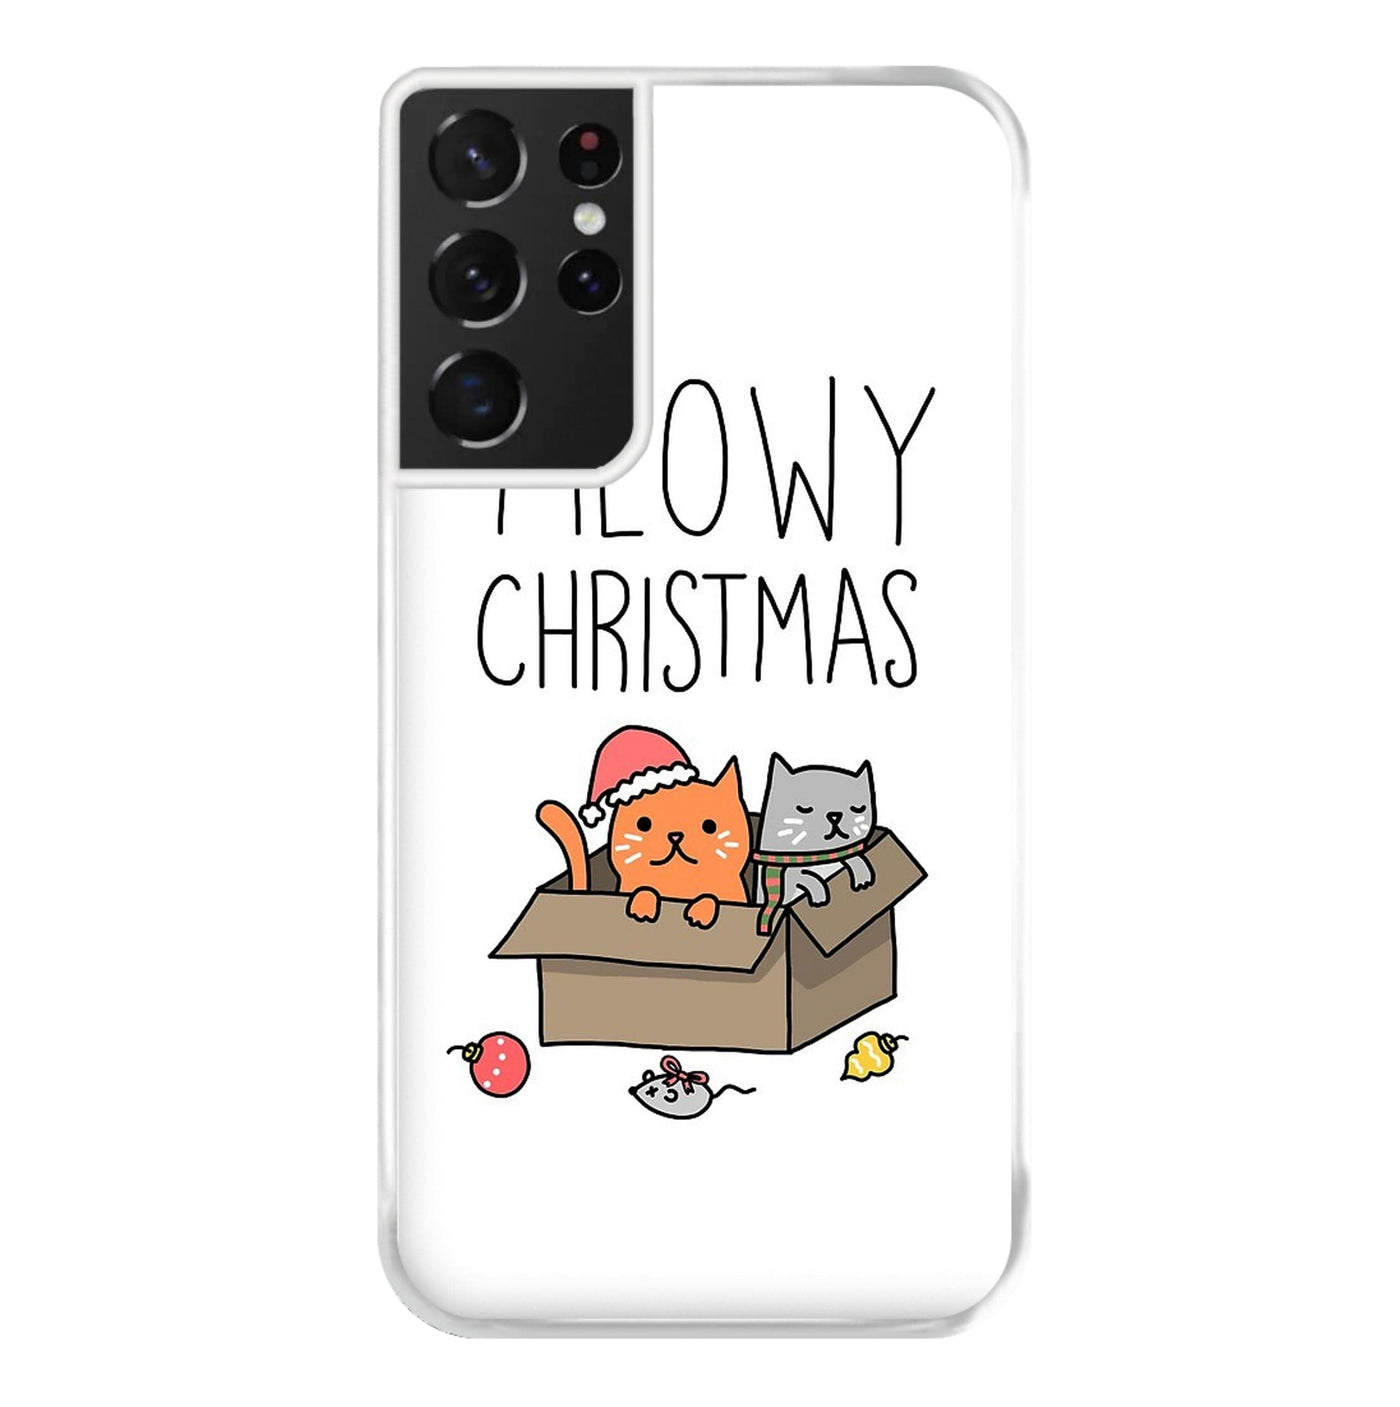 Meowy Christmas Phone Case